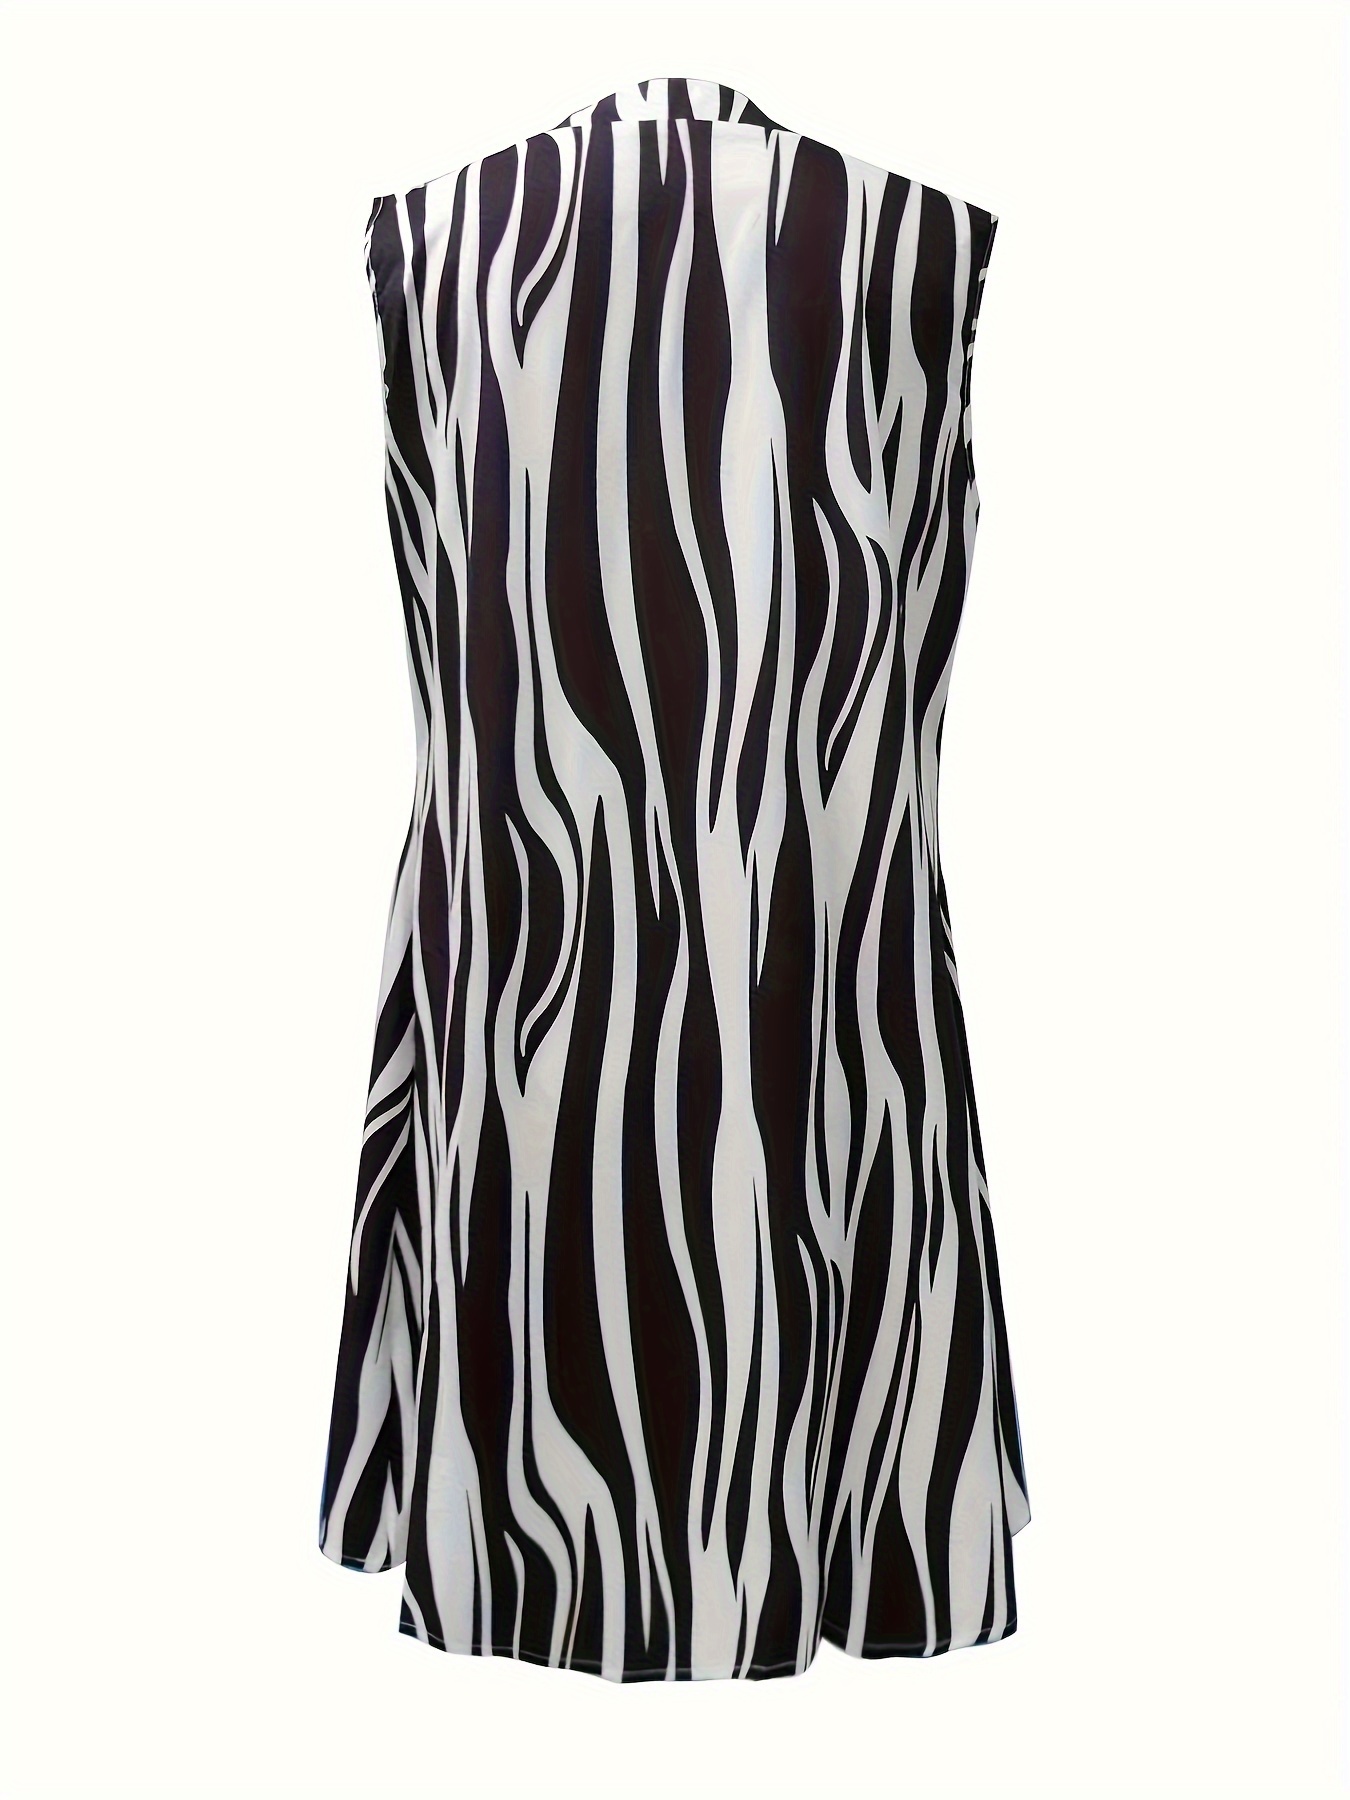 abstract ripple print dress casual v neck sleeveless dress womens clothing details 46